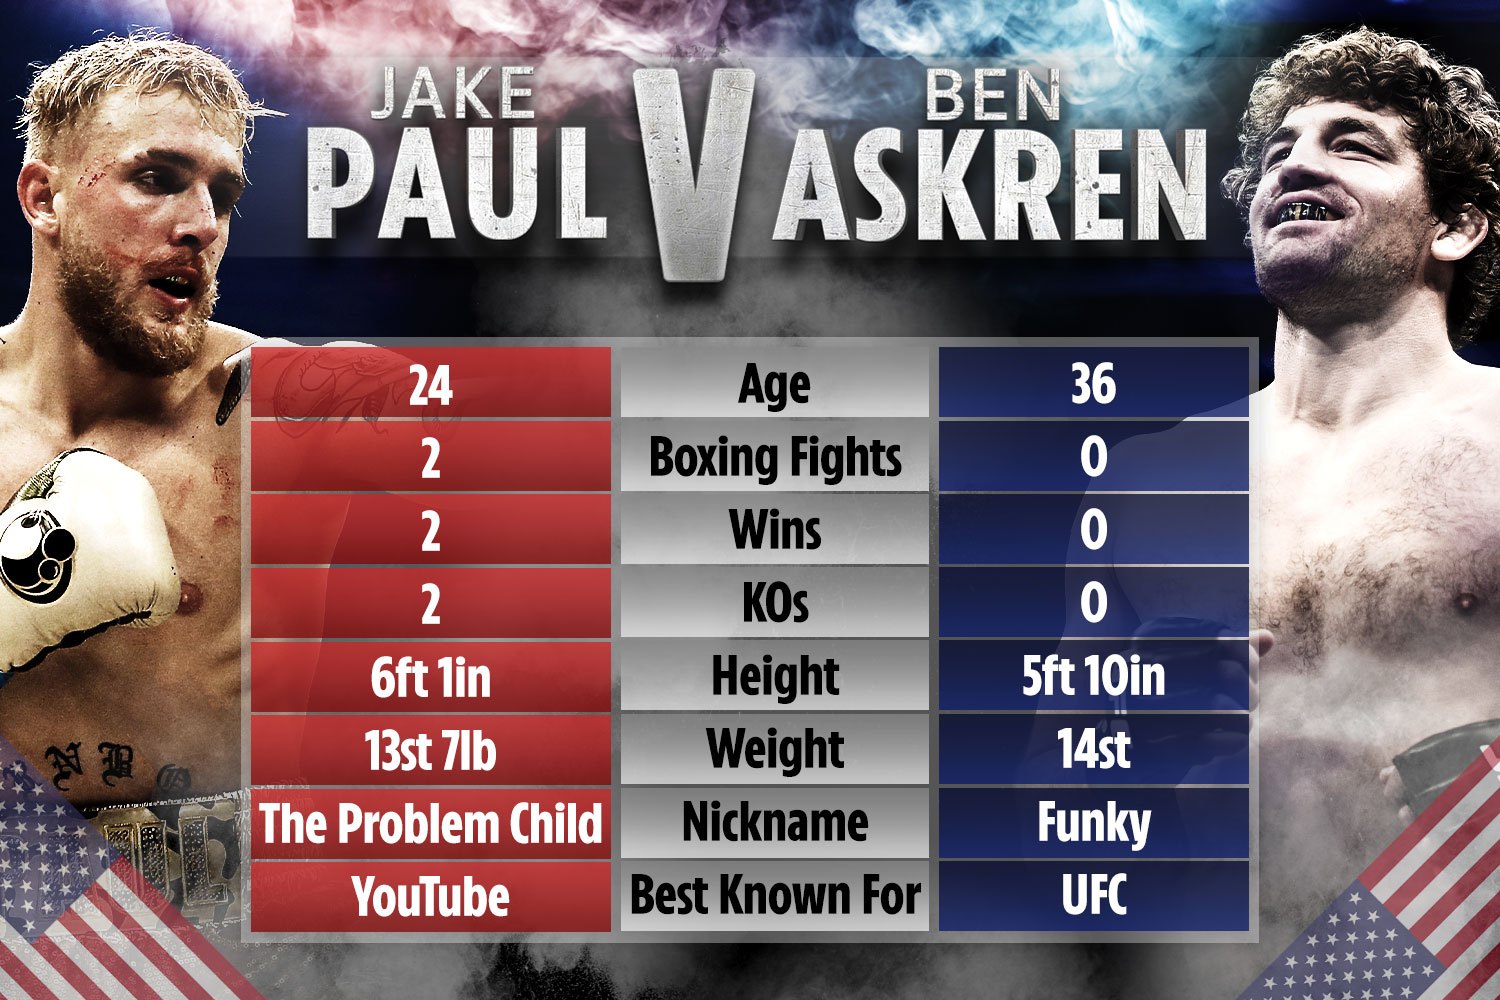 Jake Paul vs Ben Askren (4/17) live stream How to watch online, time, PPV info